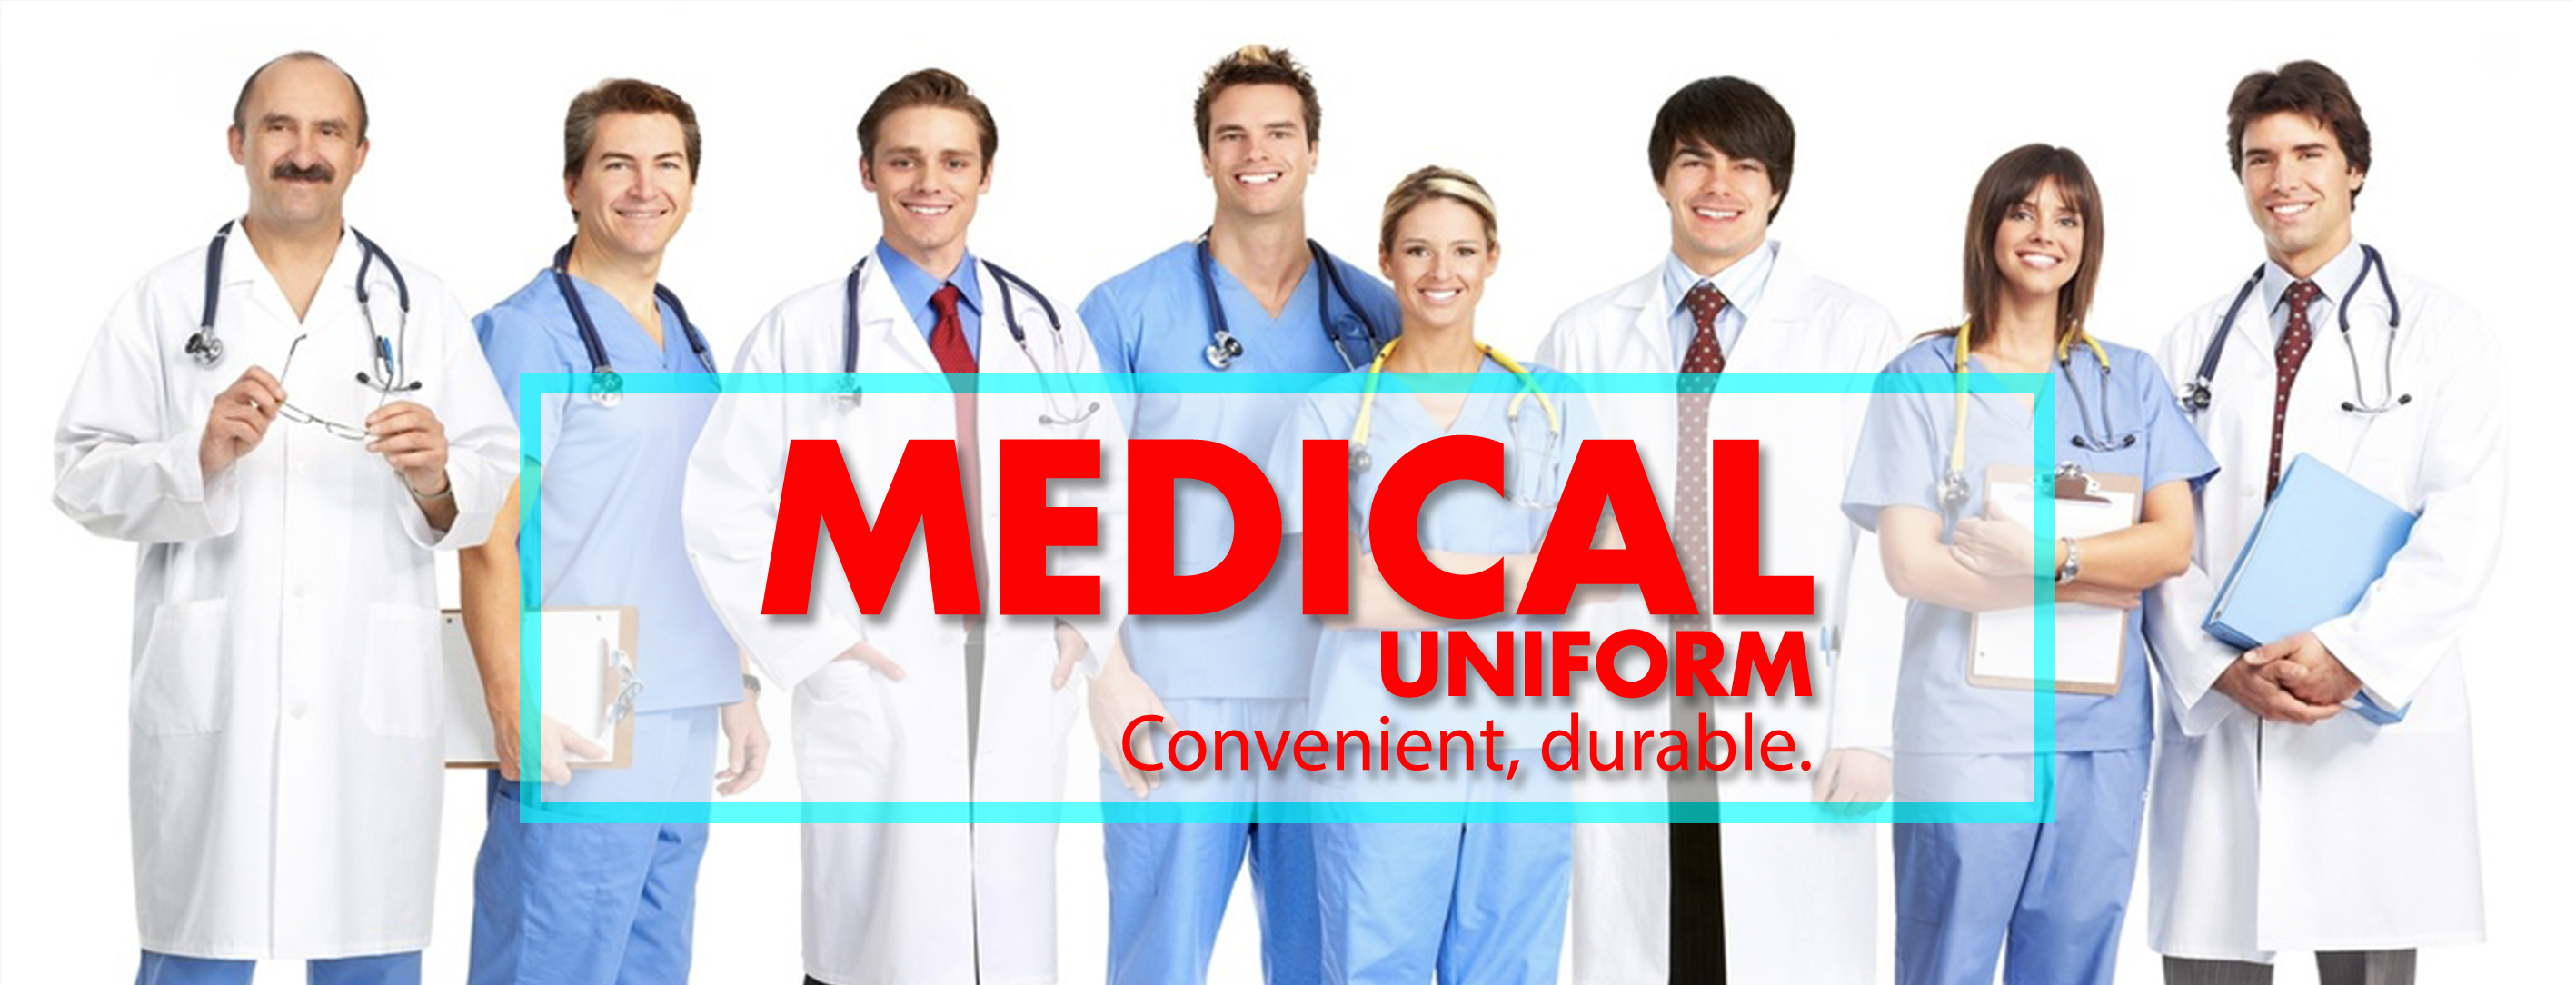 Scrubs and Medical uniform